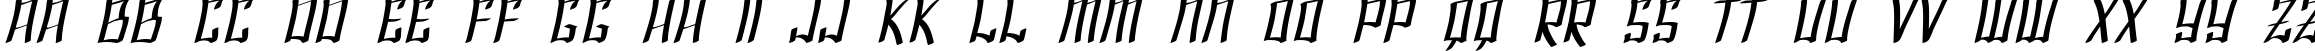 Пример написания английского алфавита шрифтом SF Shai Fontai Extended Oblique